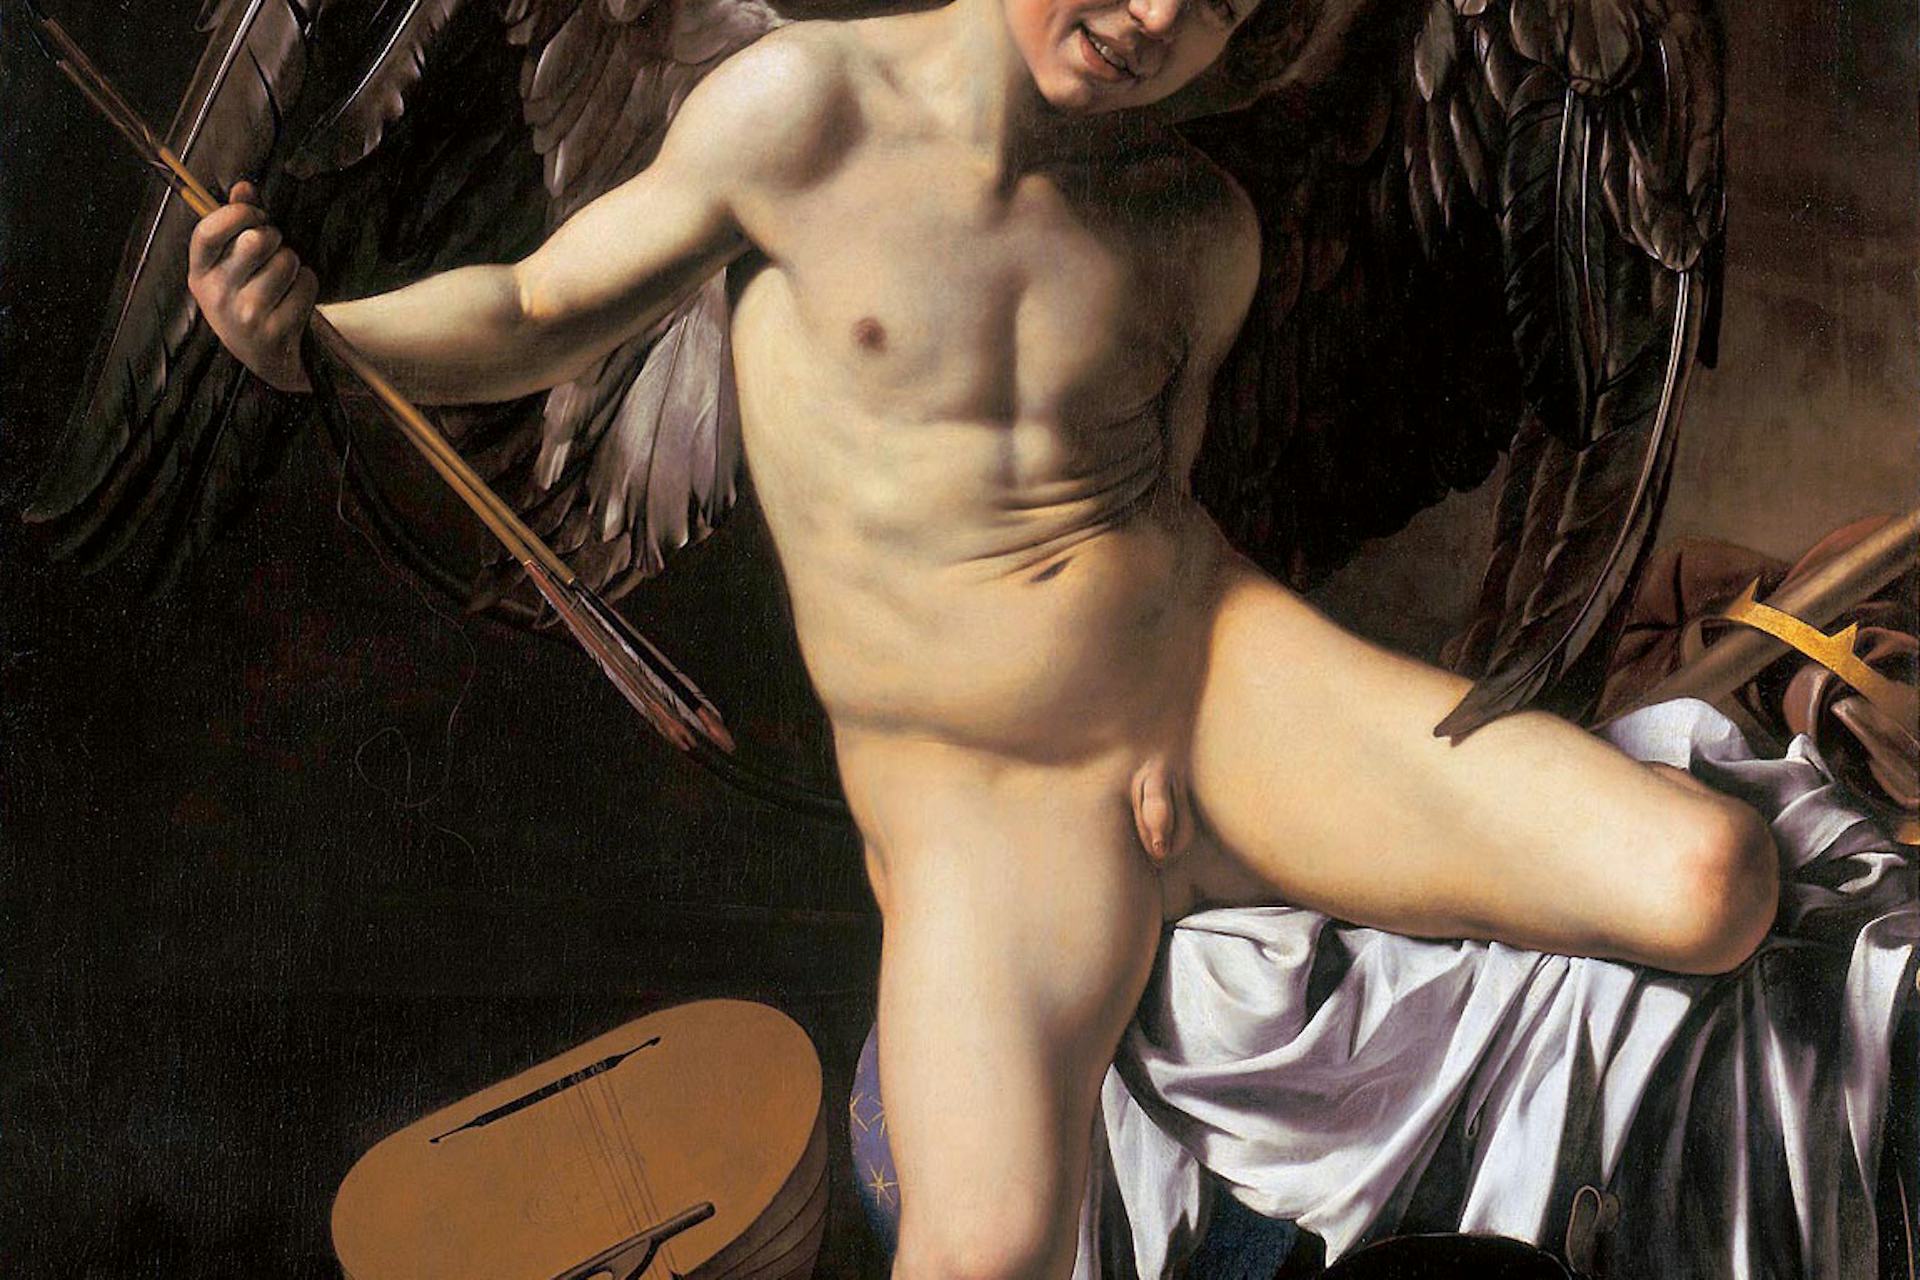 Amor Vincit Omnia by Caravaggio